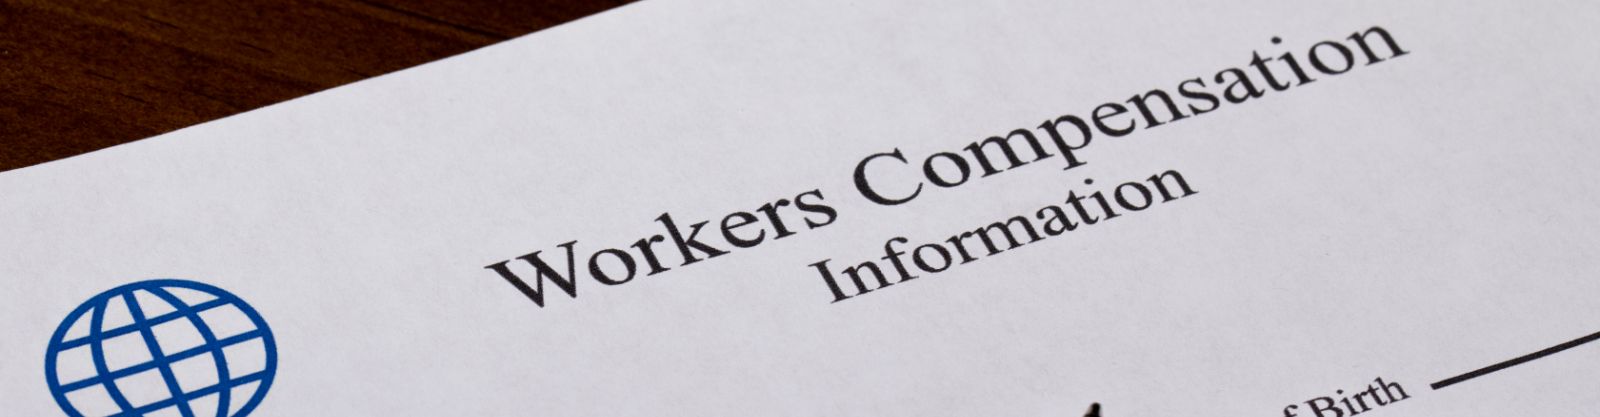 Arizona Workers Comp Impairment Rating